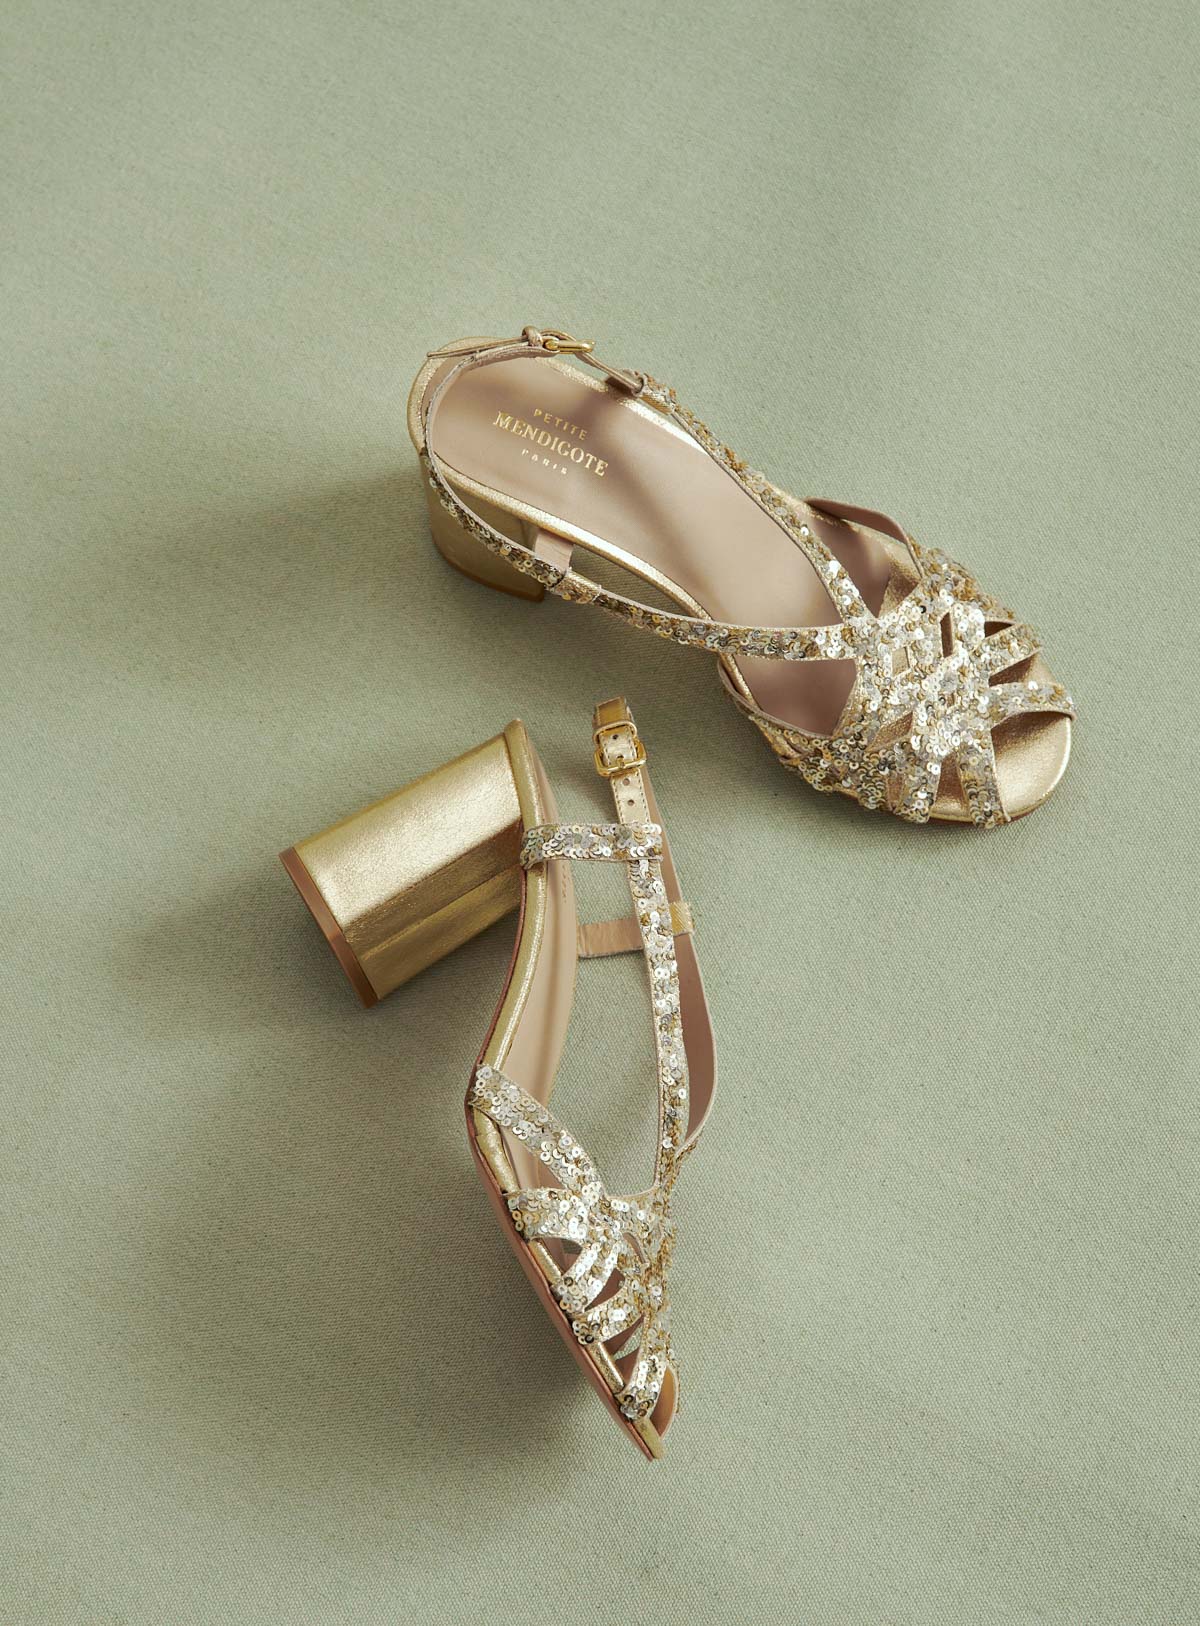 Crown heeled sandals